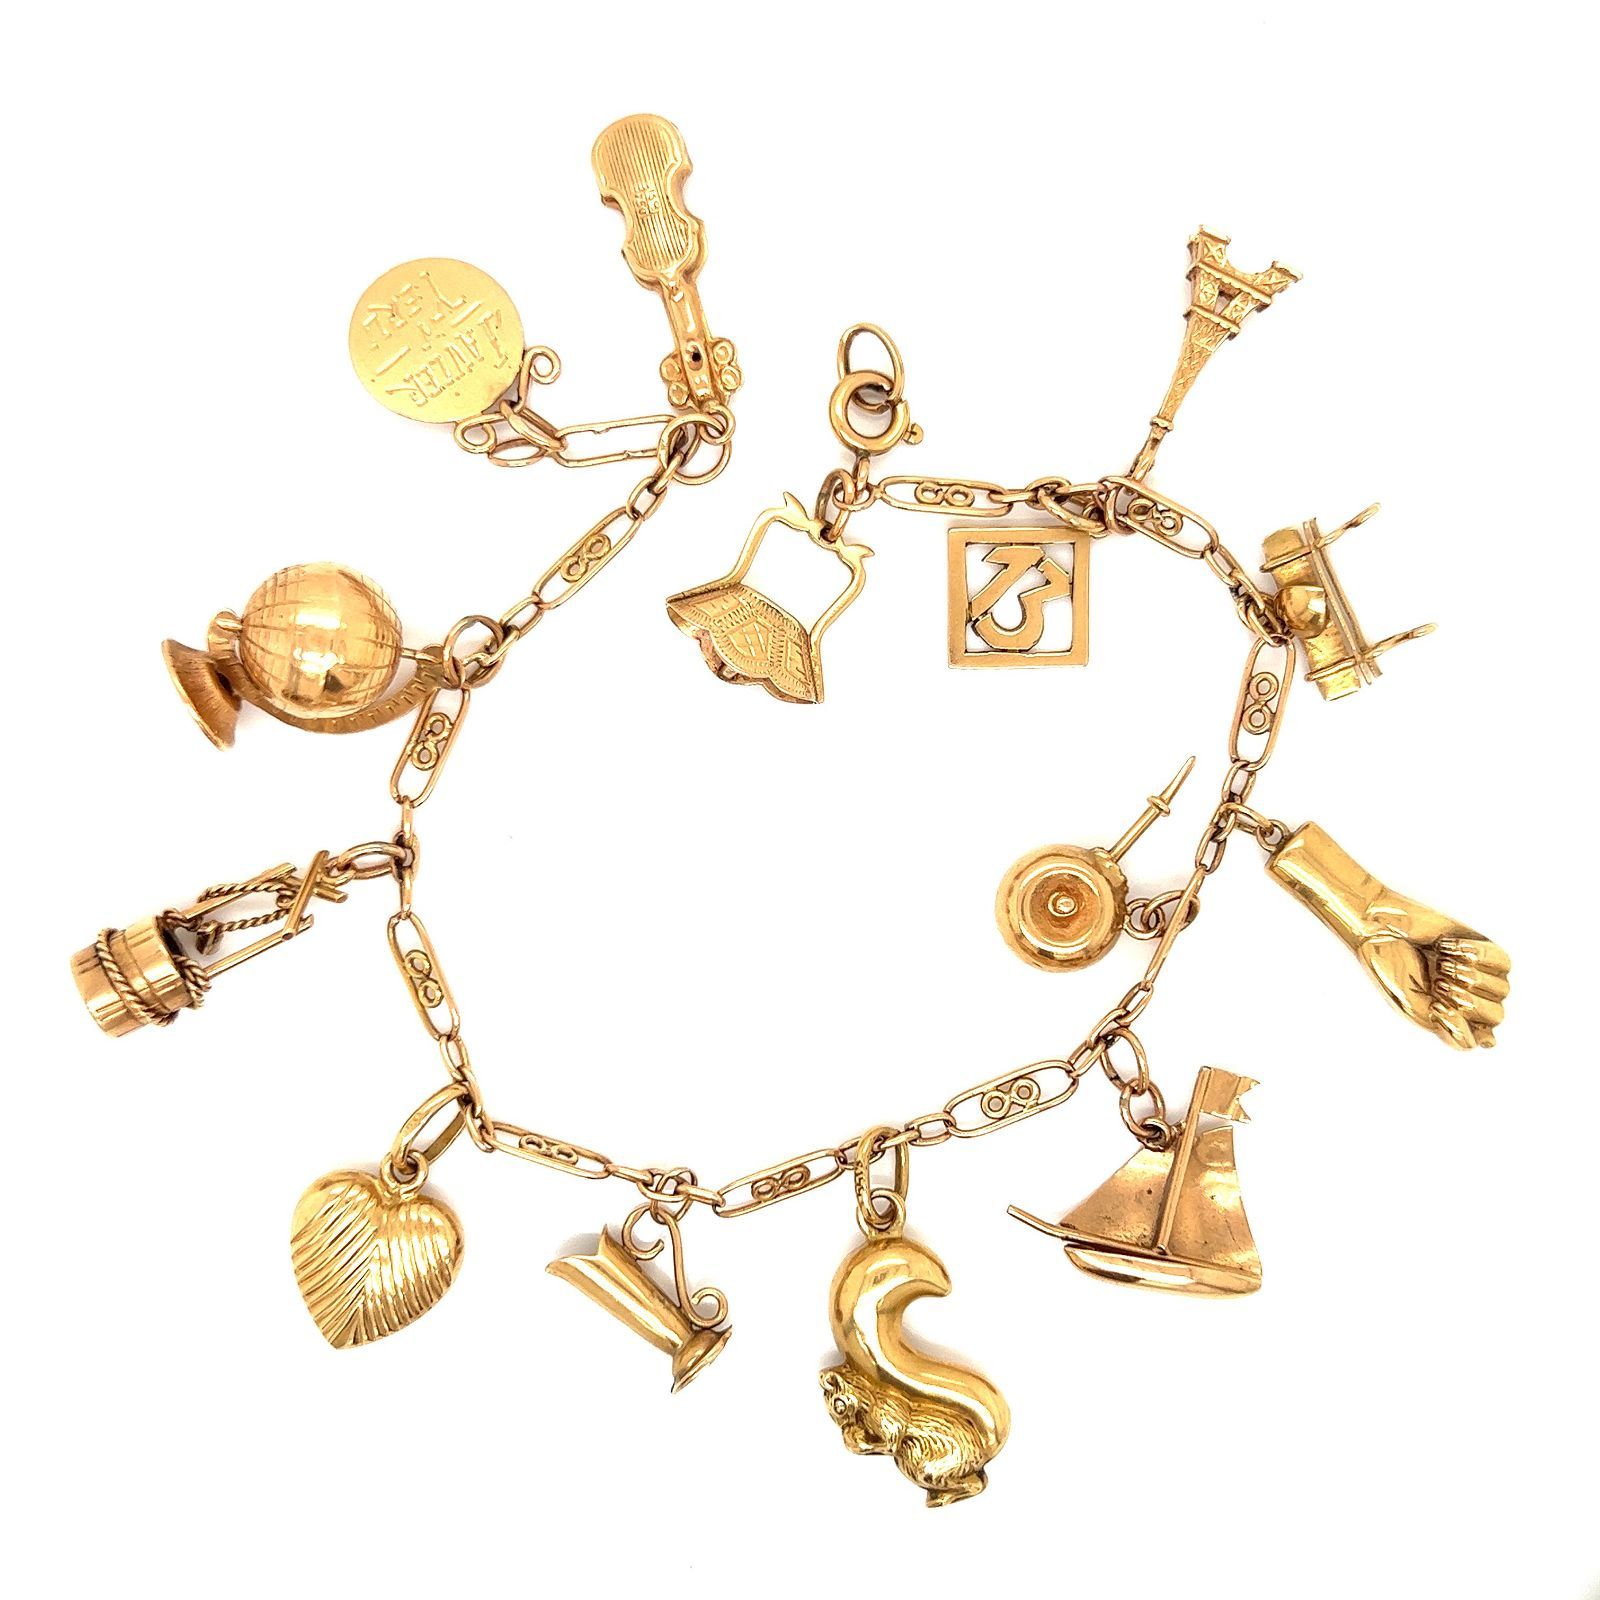 18k Charm Bracelet 18k Pink Gold Weight 23.64g Charm Bracelet 8.5”x1.16”